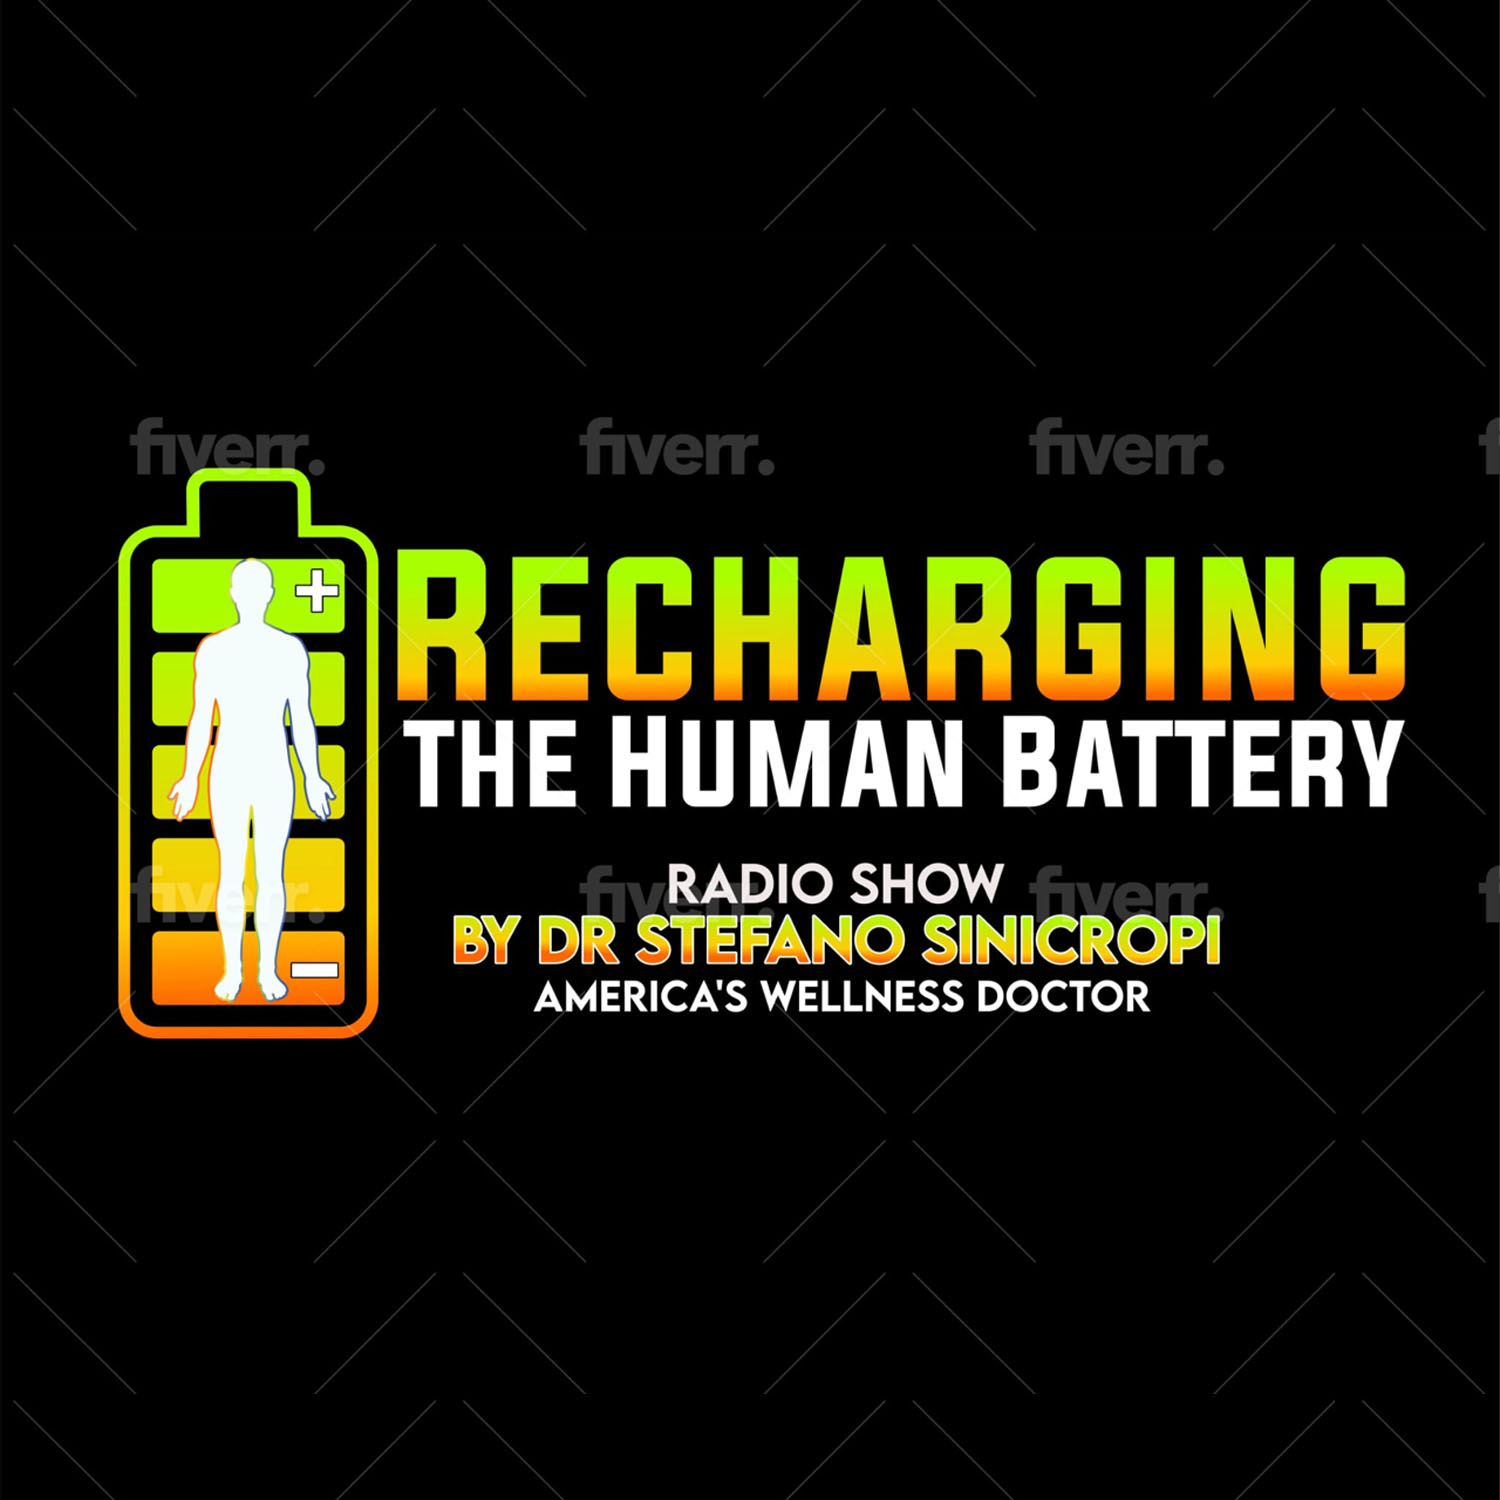 Recharging the Human Battery